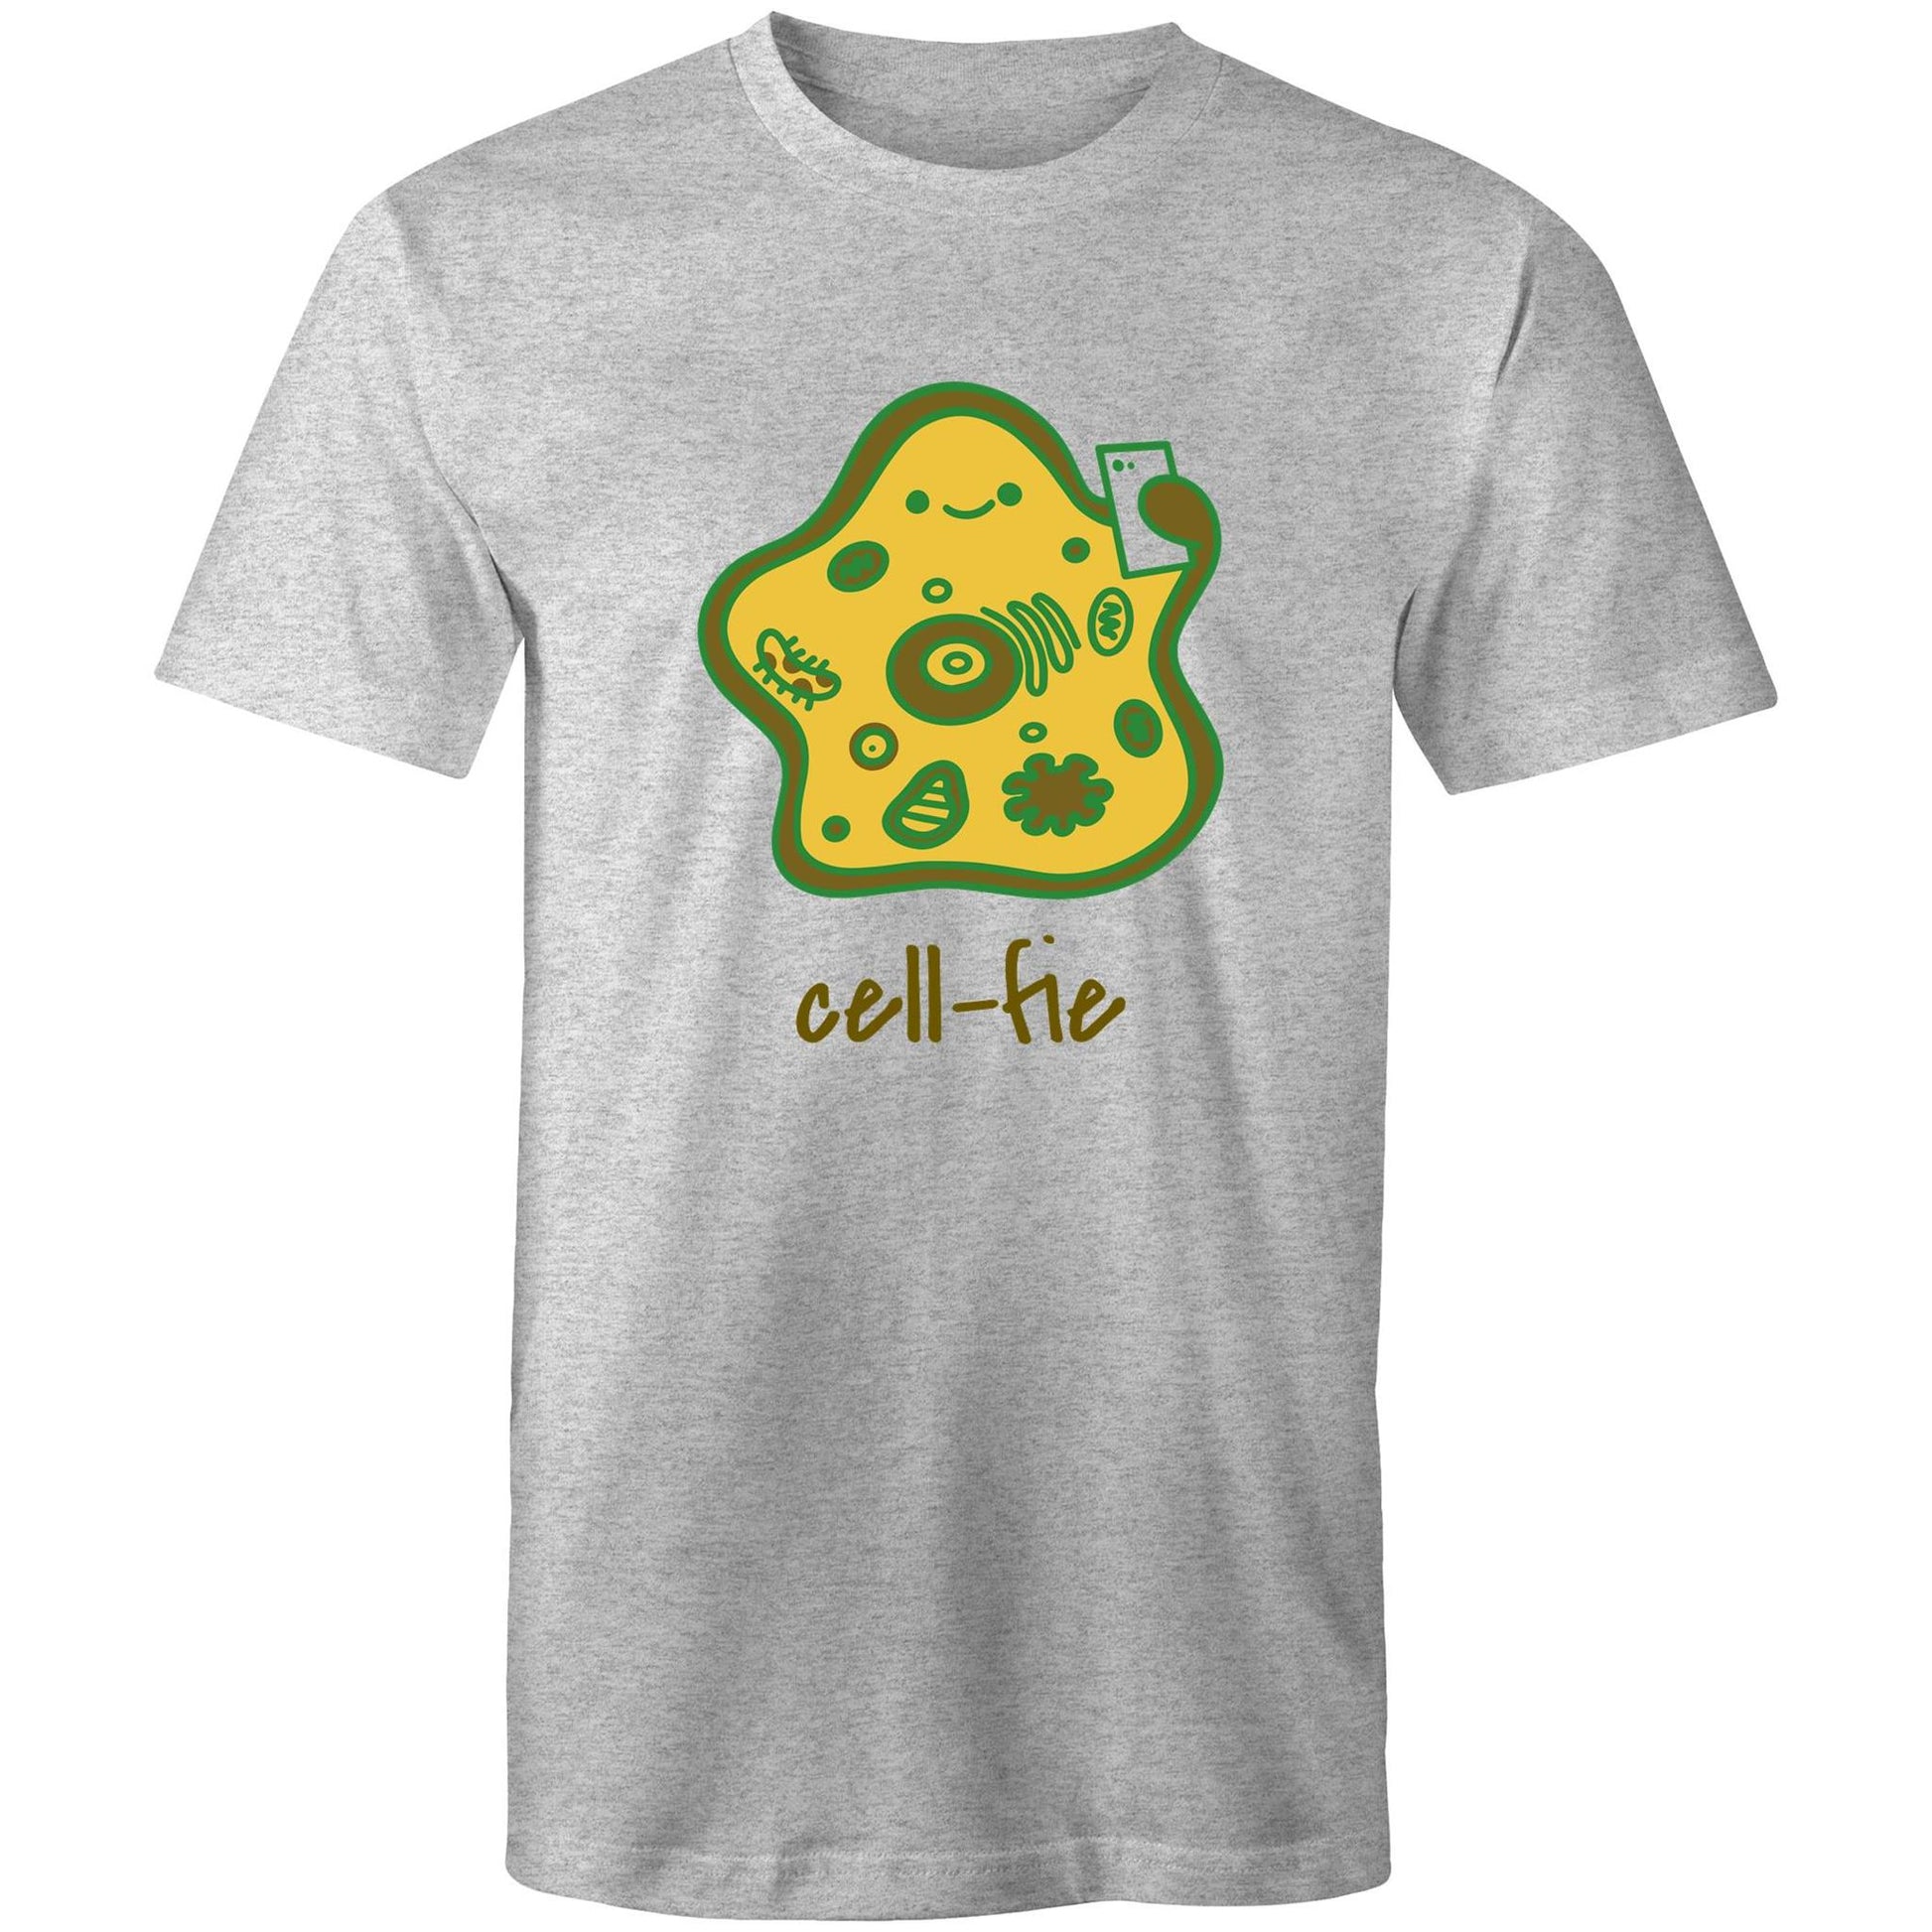 Cell-fie - Mens T-Shirt Grey Marle Mens T-shirt Science